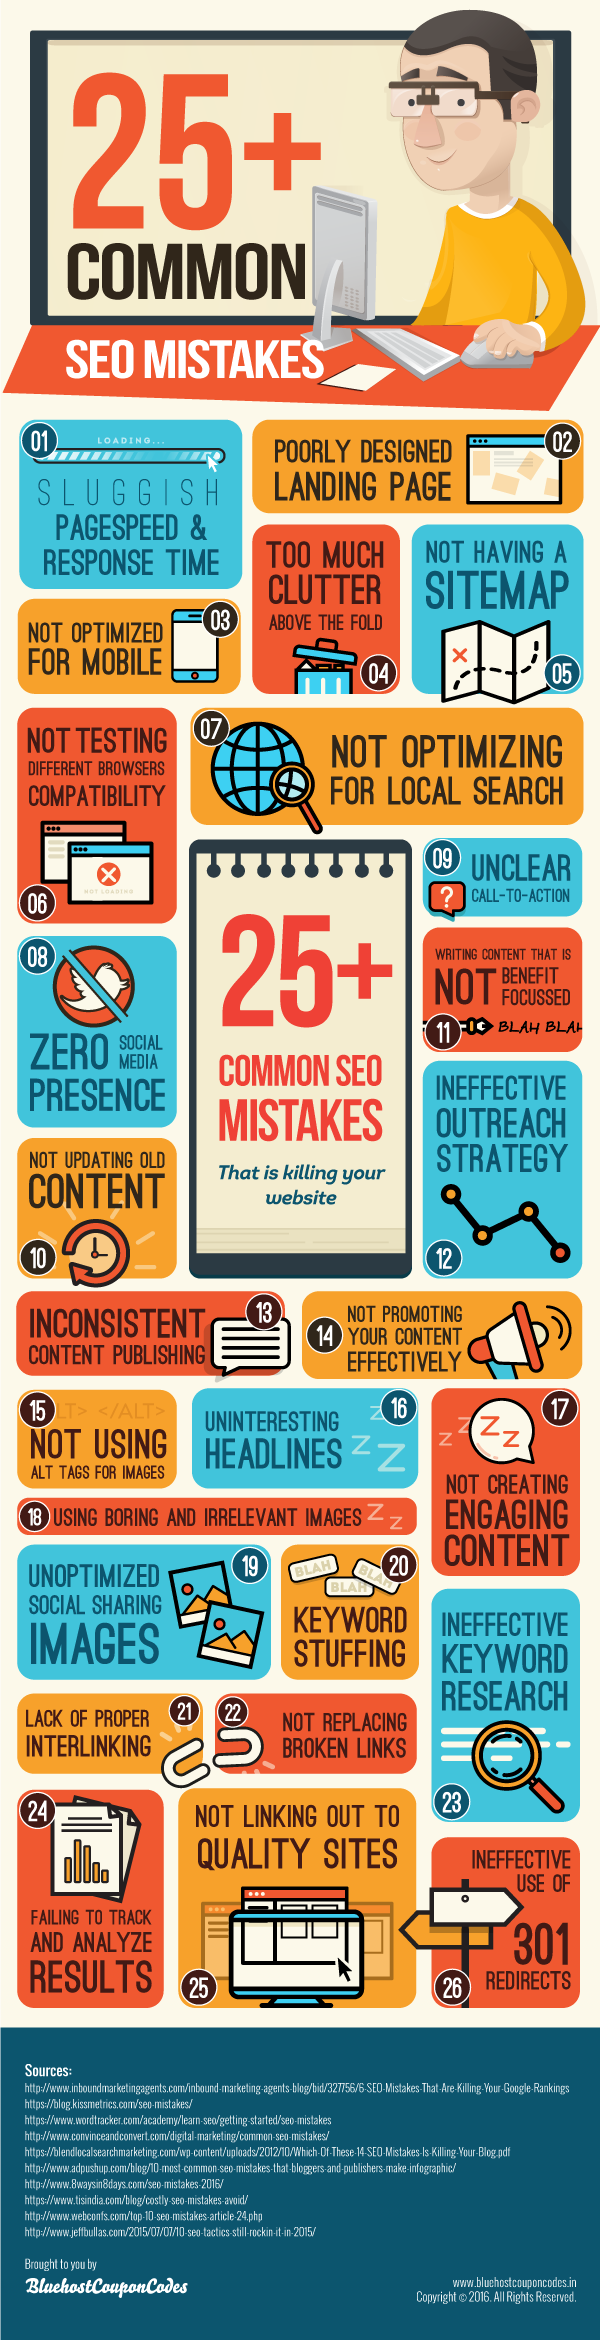 common-seo-mistakes-infographic